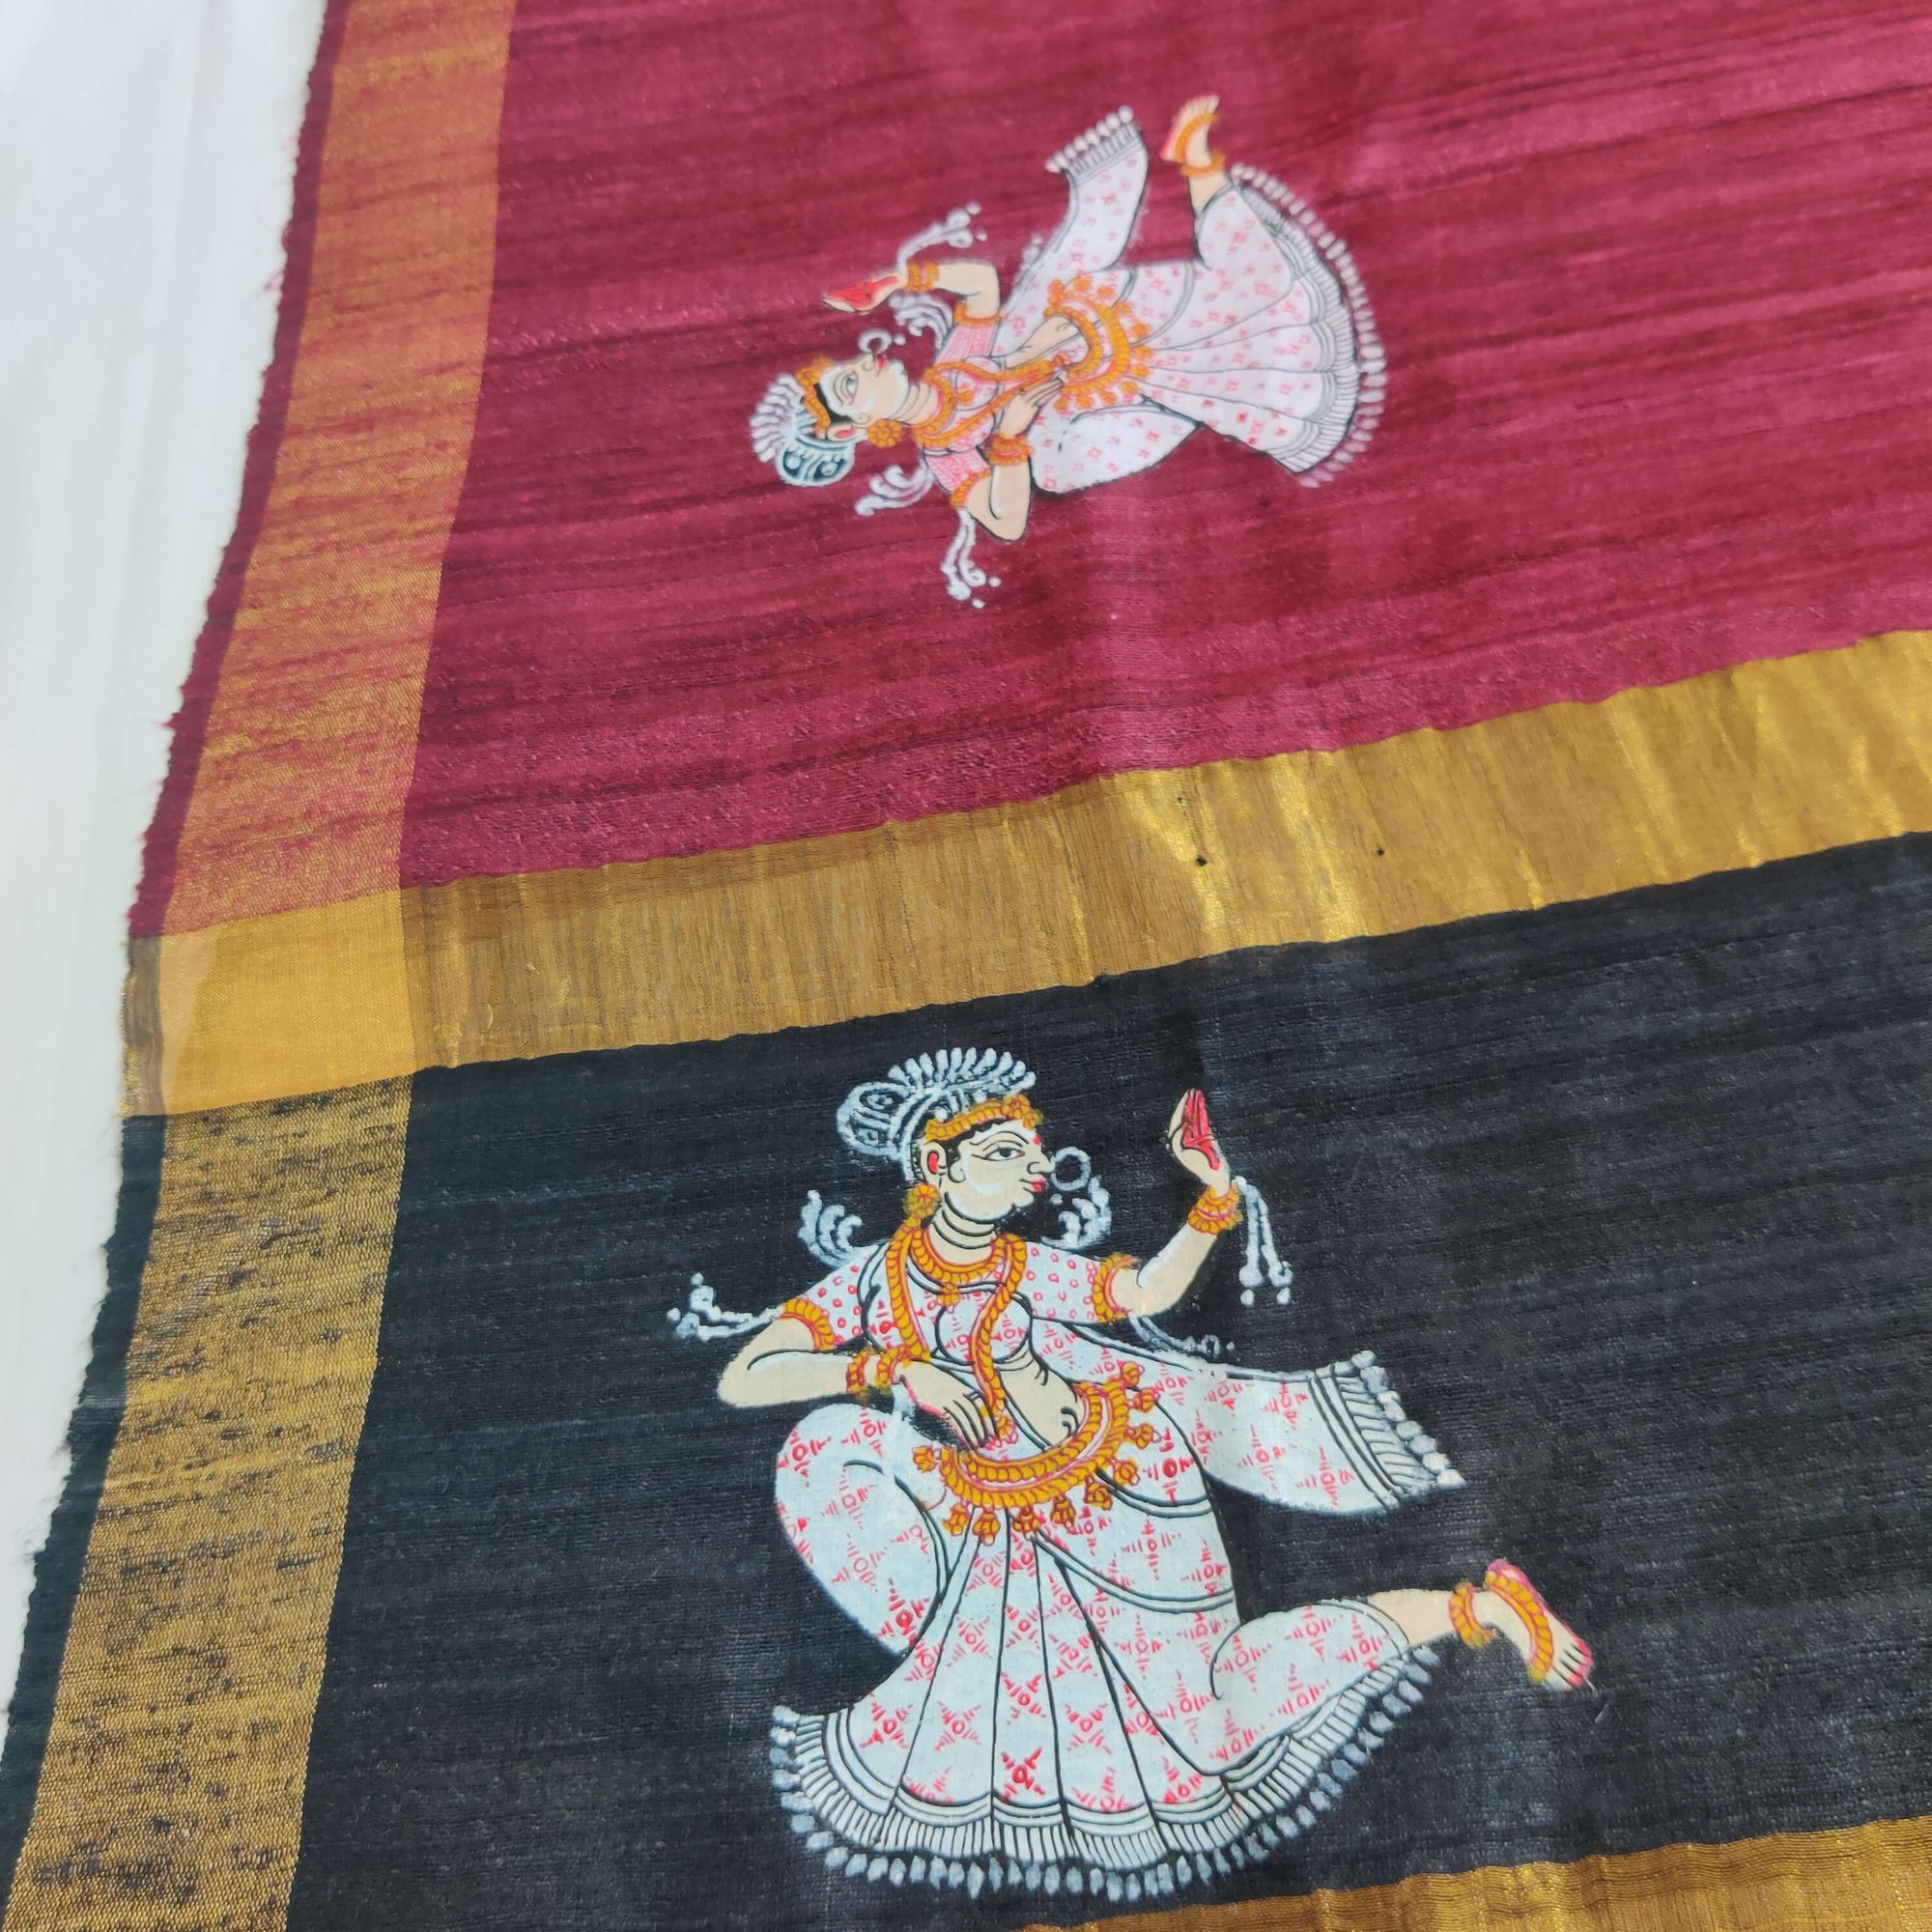 Maroon Tussar Silk Dupatta with handpainted Pattachitra Motifs